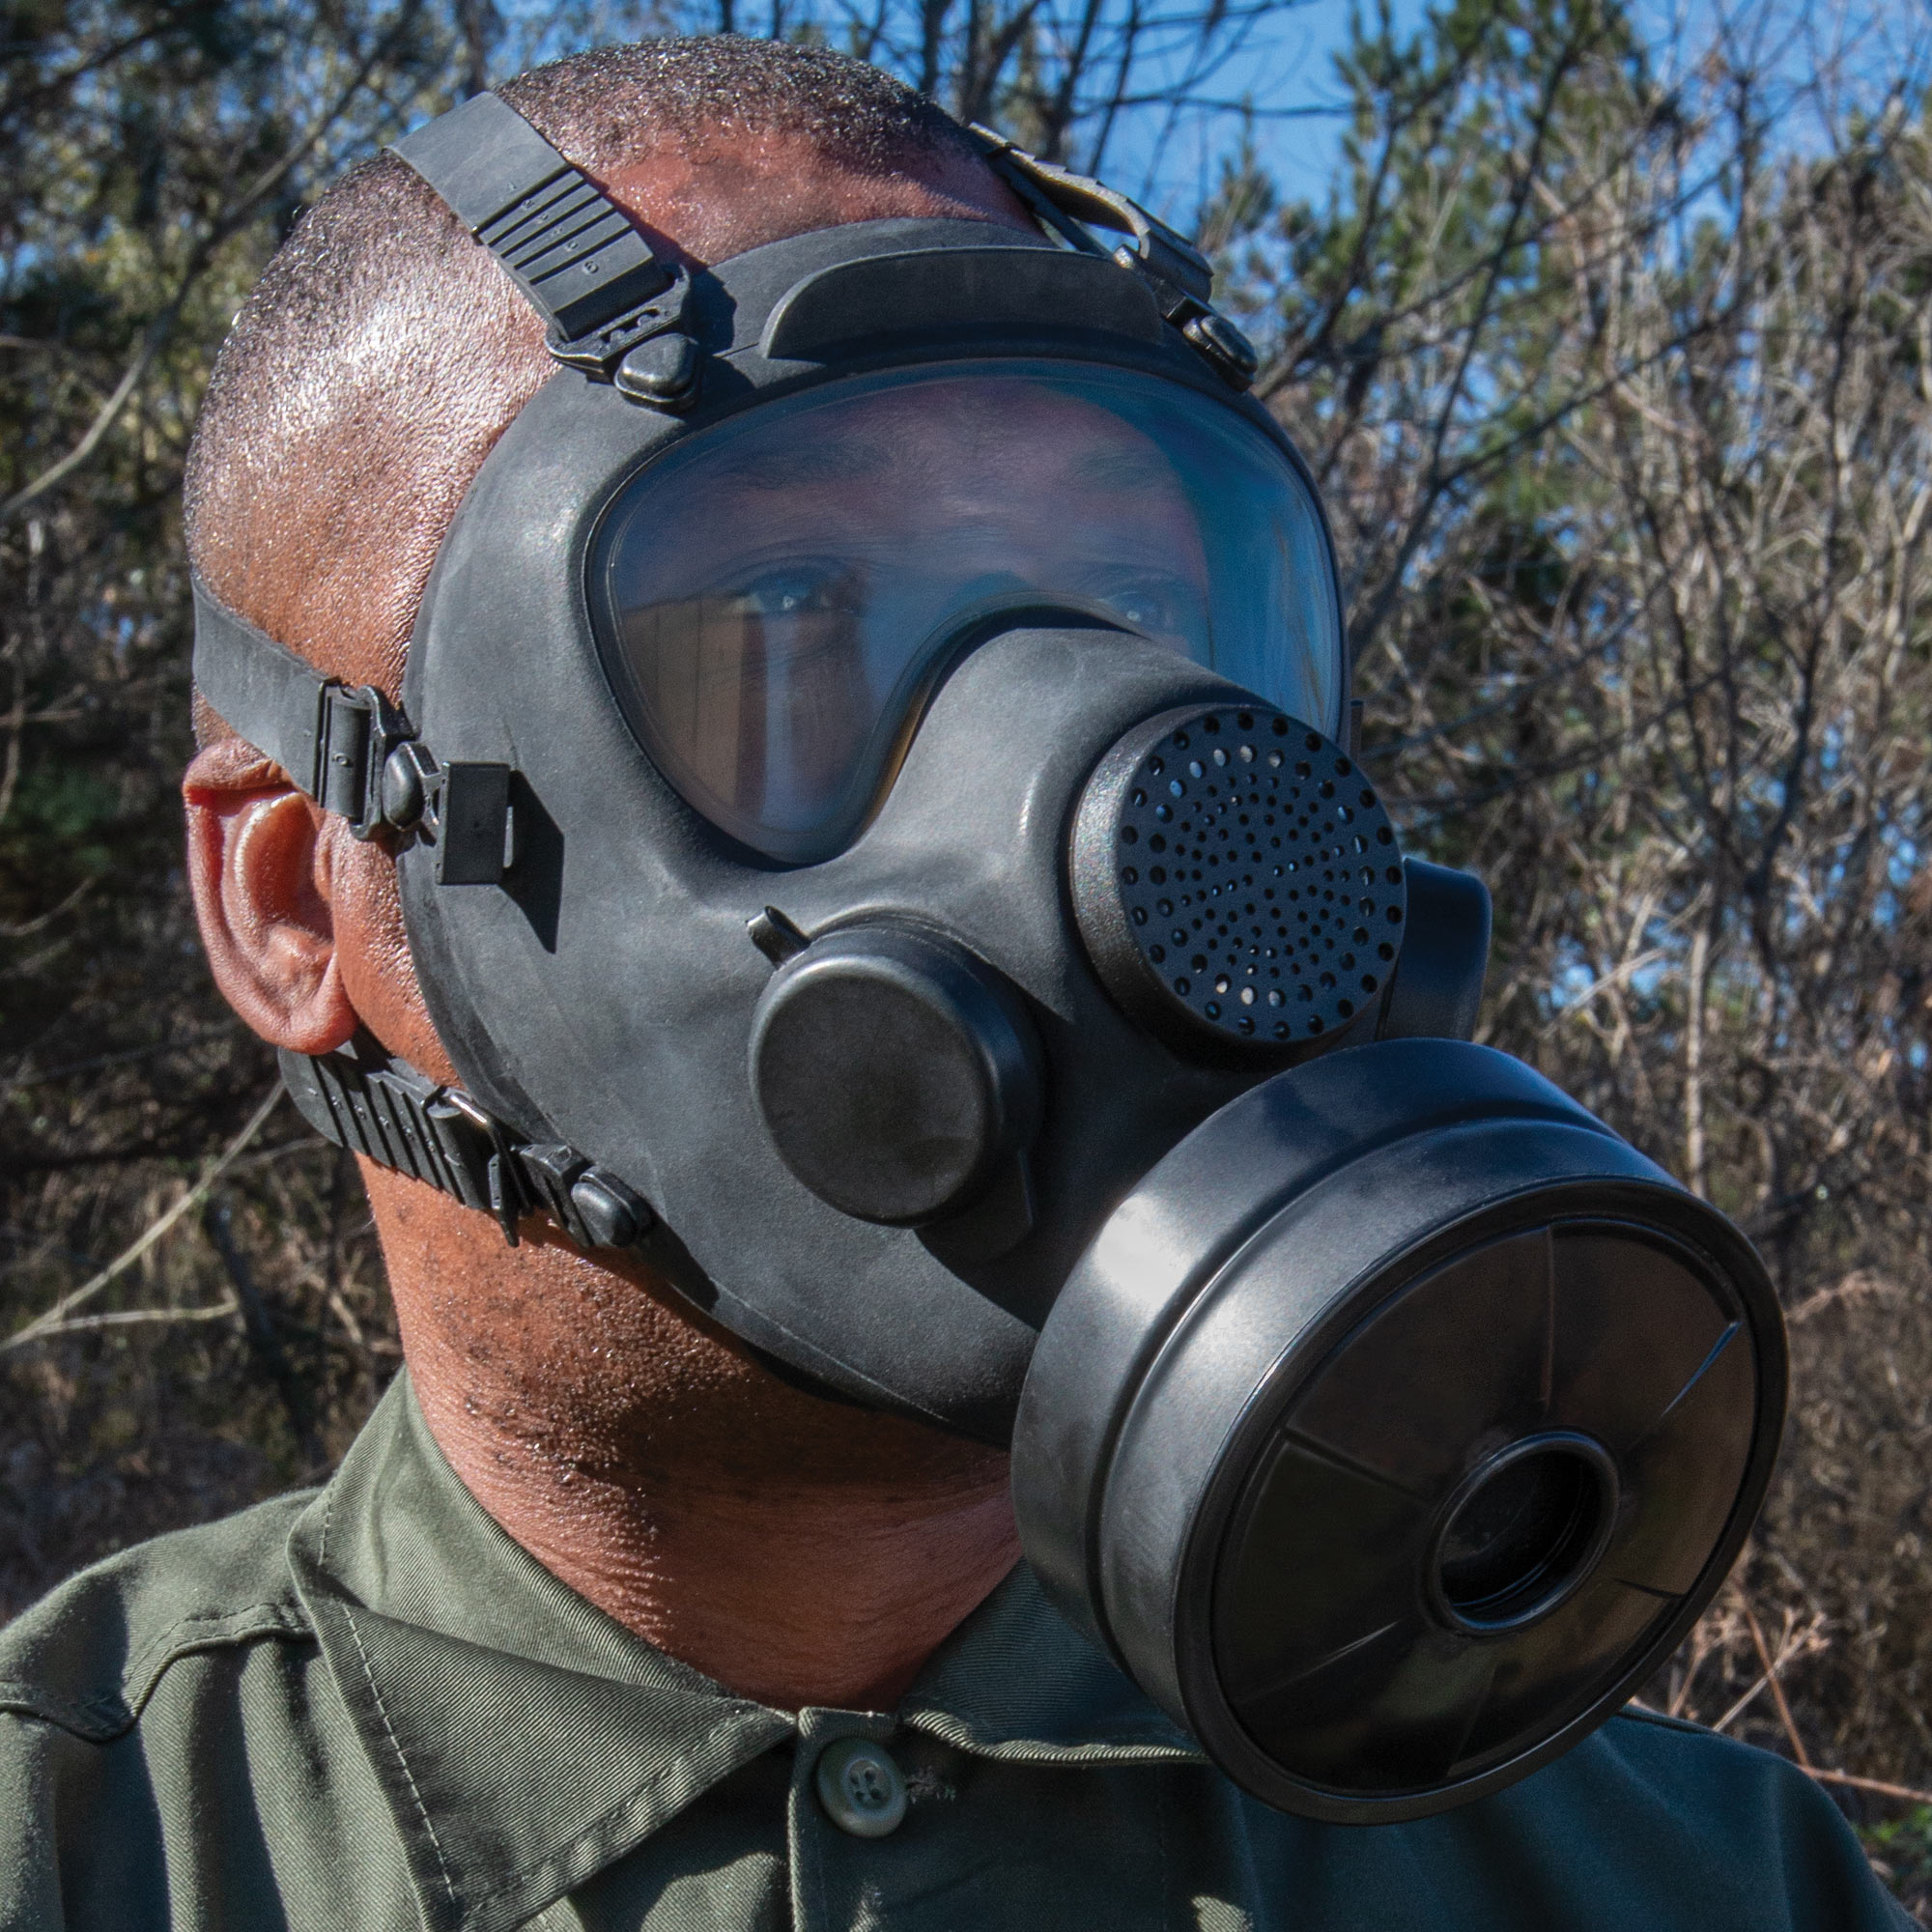 new israeli nbc gas mask